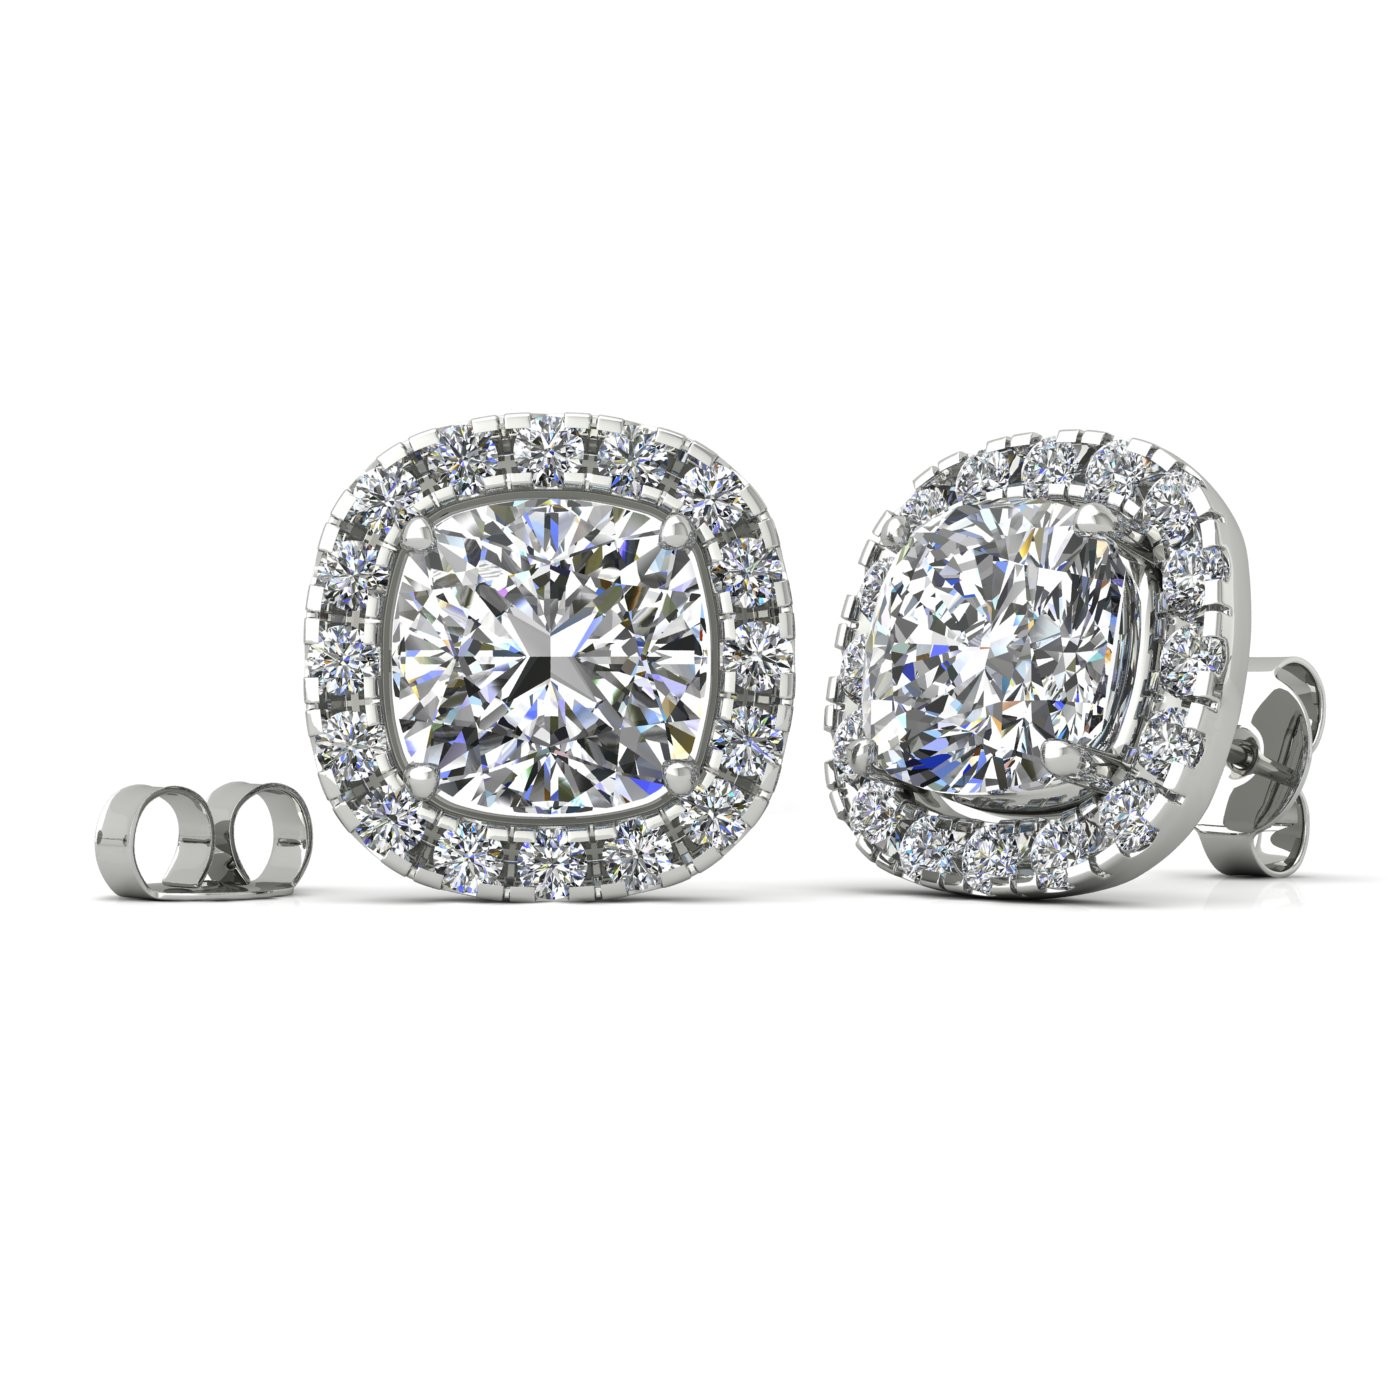 18k rose gold  2,0 ct each (4,0 tcw) 4 prongs cushion shape diamond earrings with diamond pavÉ set halo Photos & images